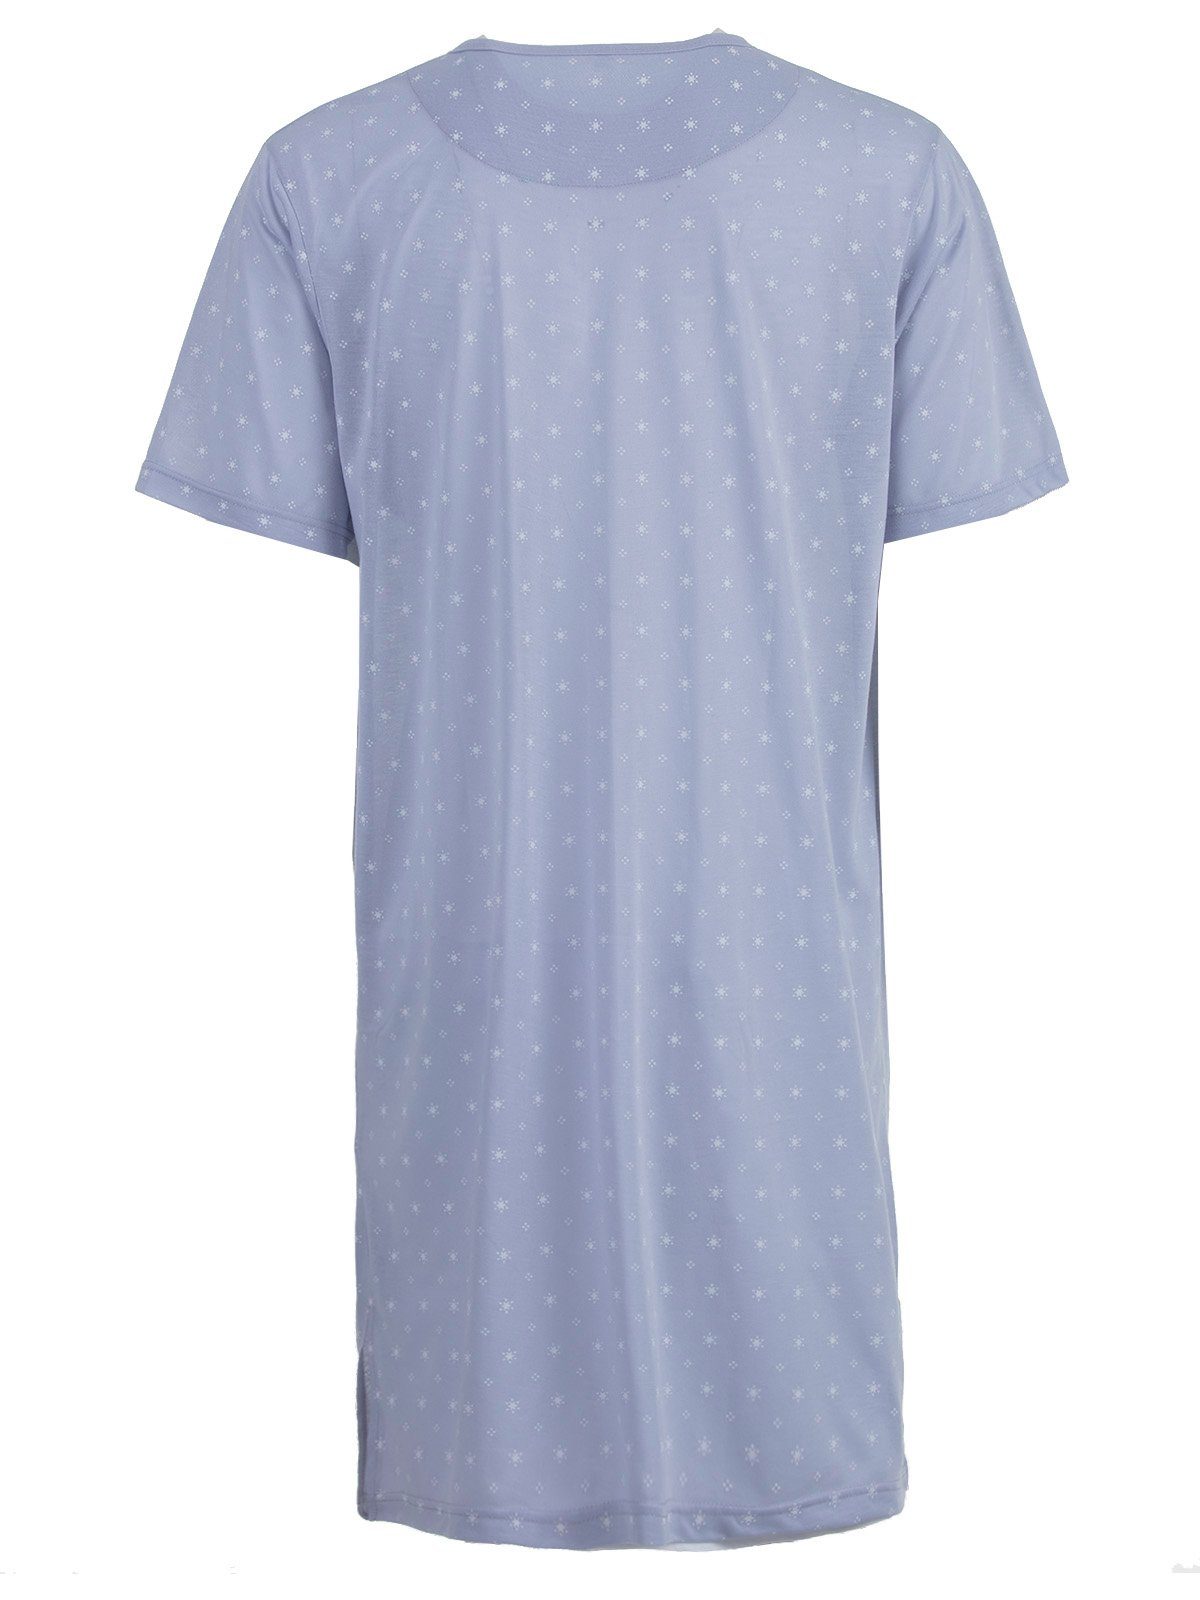 Nachthemd Kurzarm Nachthemd grau - Lucky Brusttasche Sonne